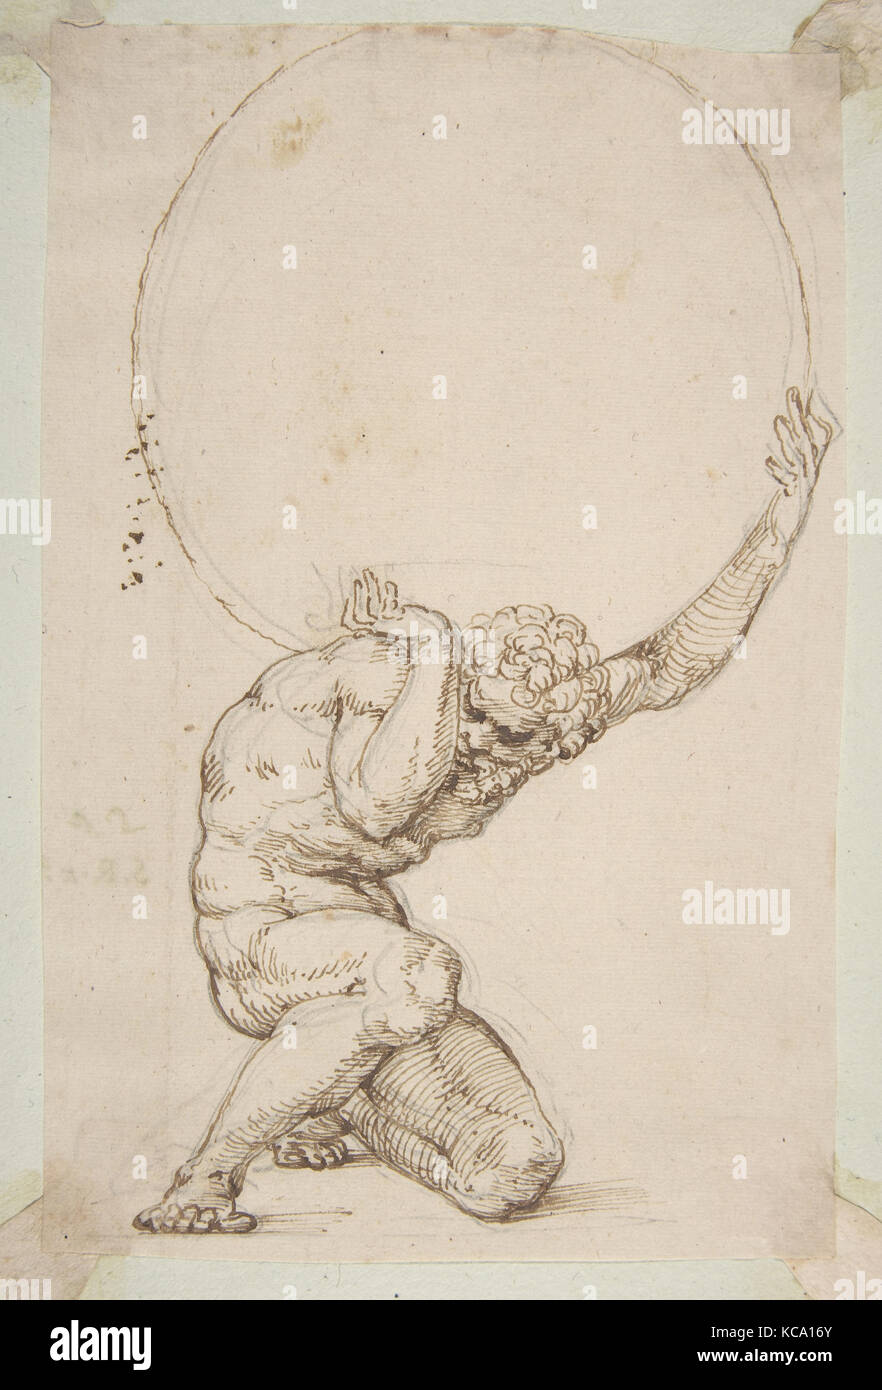 Crouching Abbildung von Atlas, Tommaso Baldassare Peruzzi, 1481 - 1536 Stockfoto